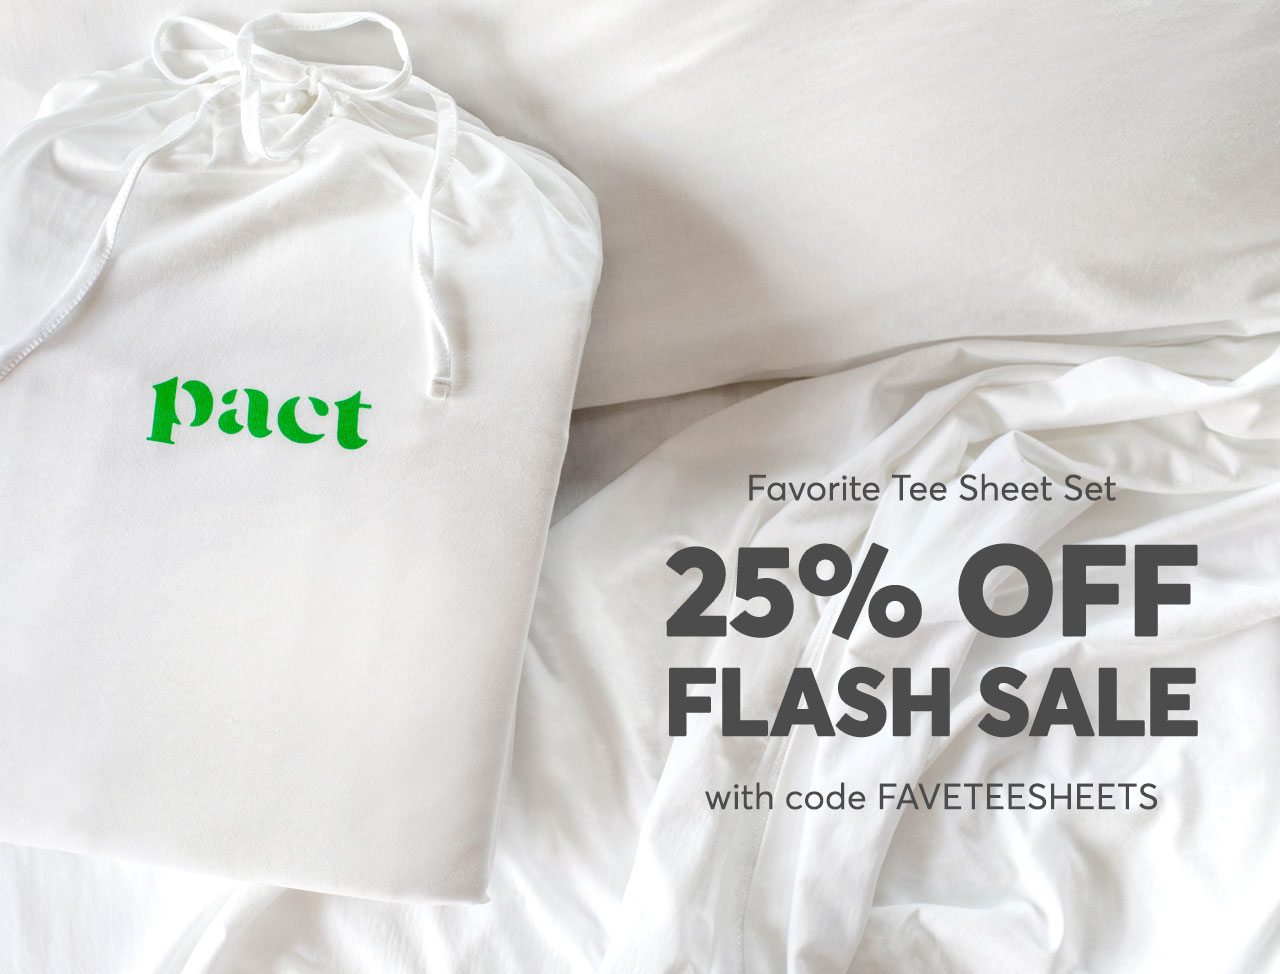 Favorite Tee Sheet Set 25% off flash sale! use code FAVETEESHEETS